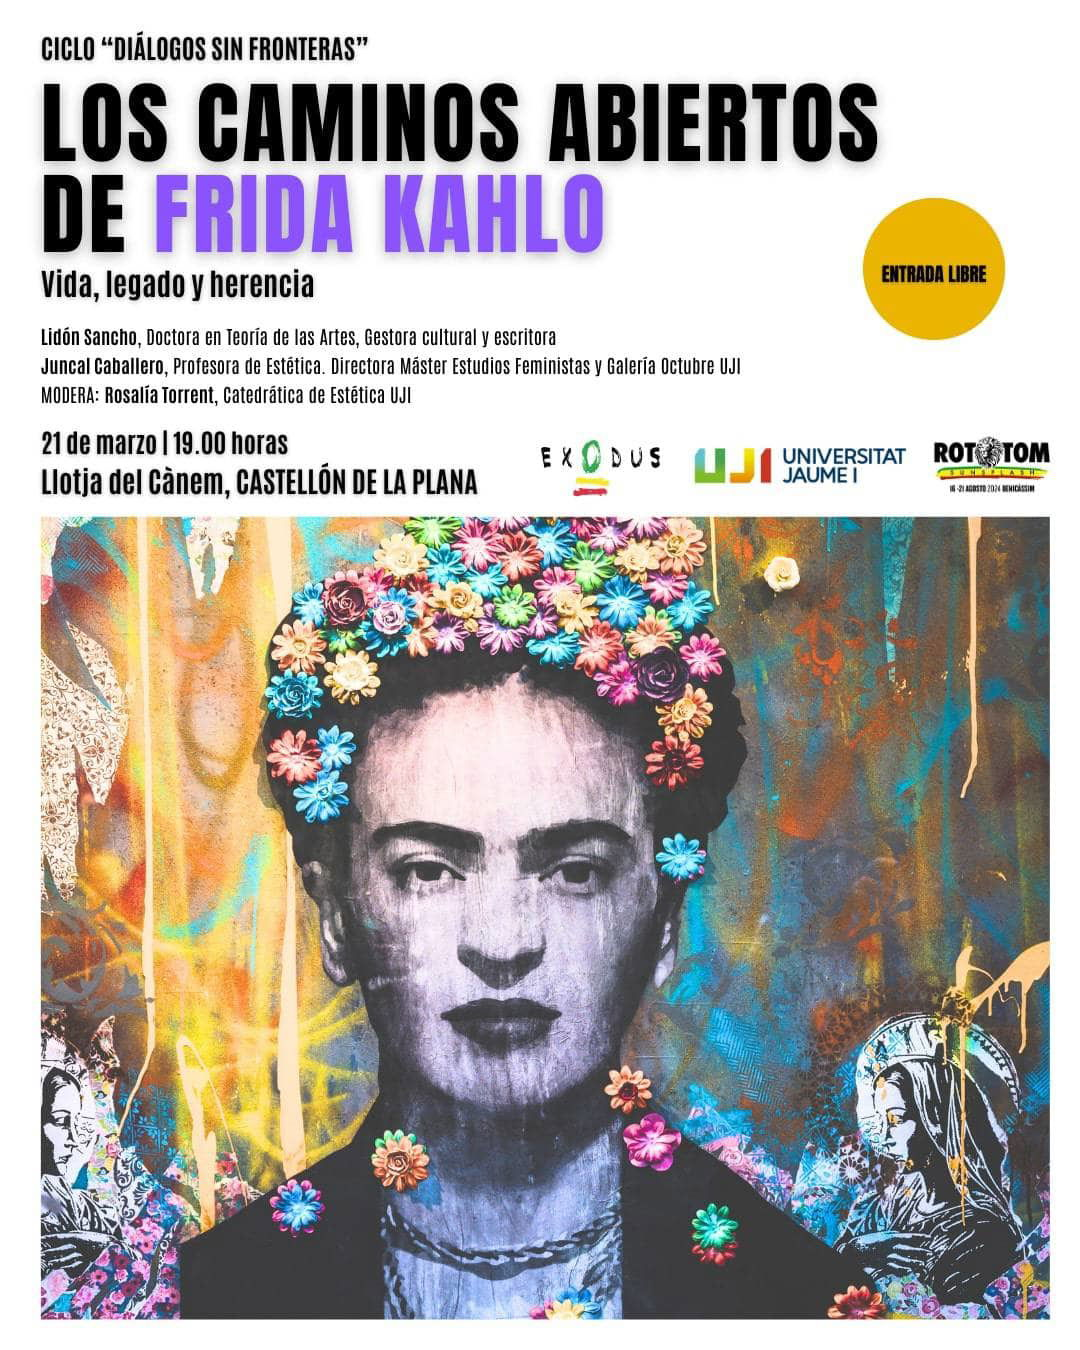 The Open Roads of Frida Kahlo